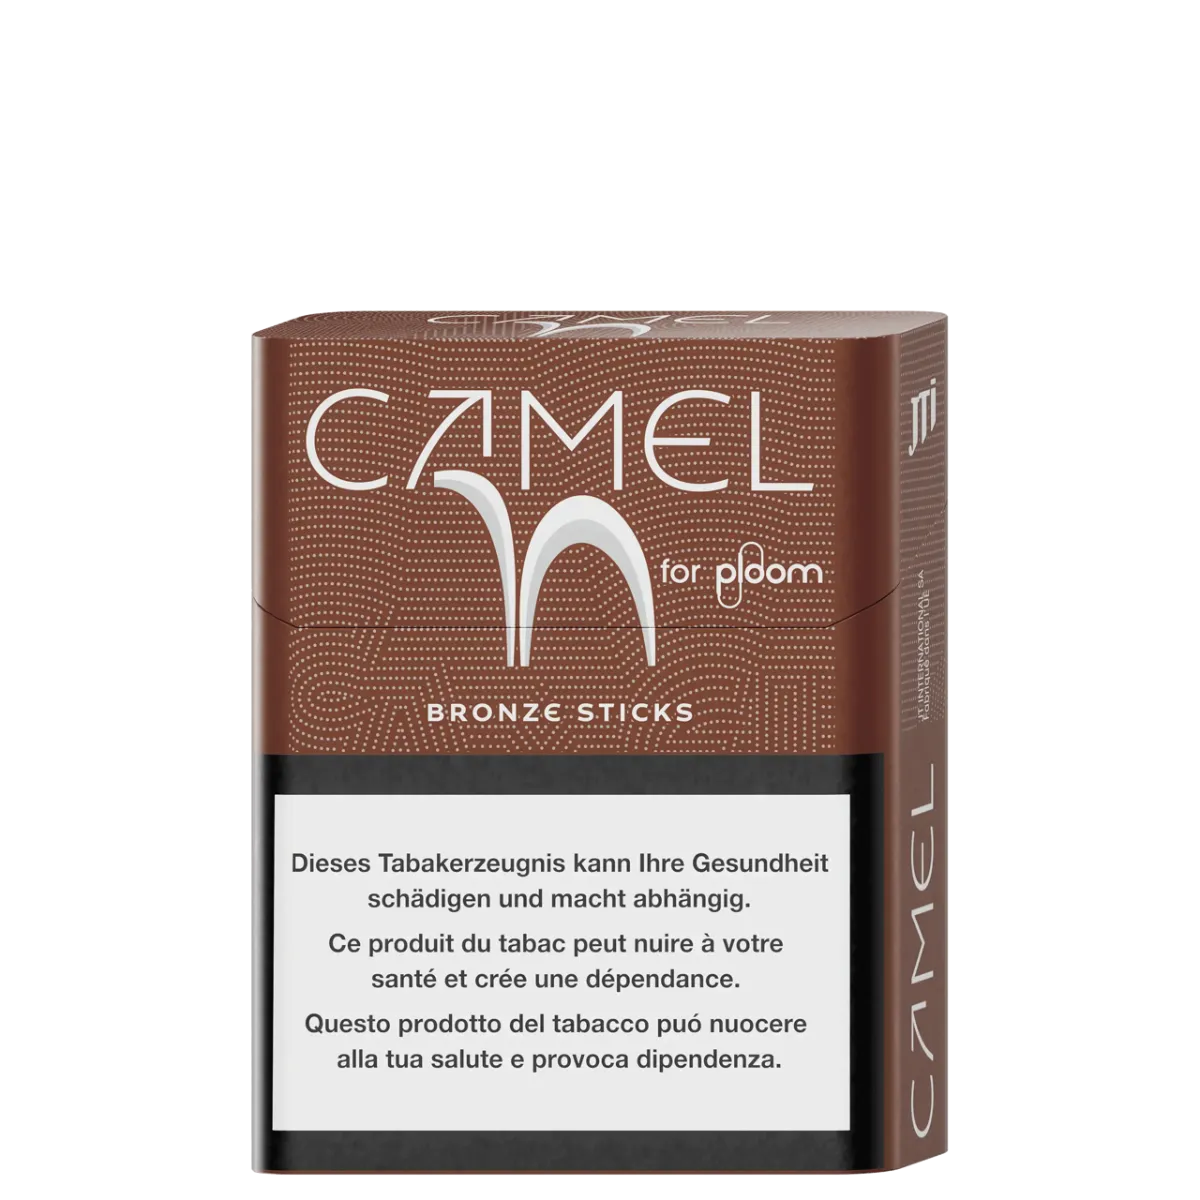 Camel Bronze sticks pour ploom X advanced
